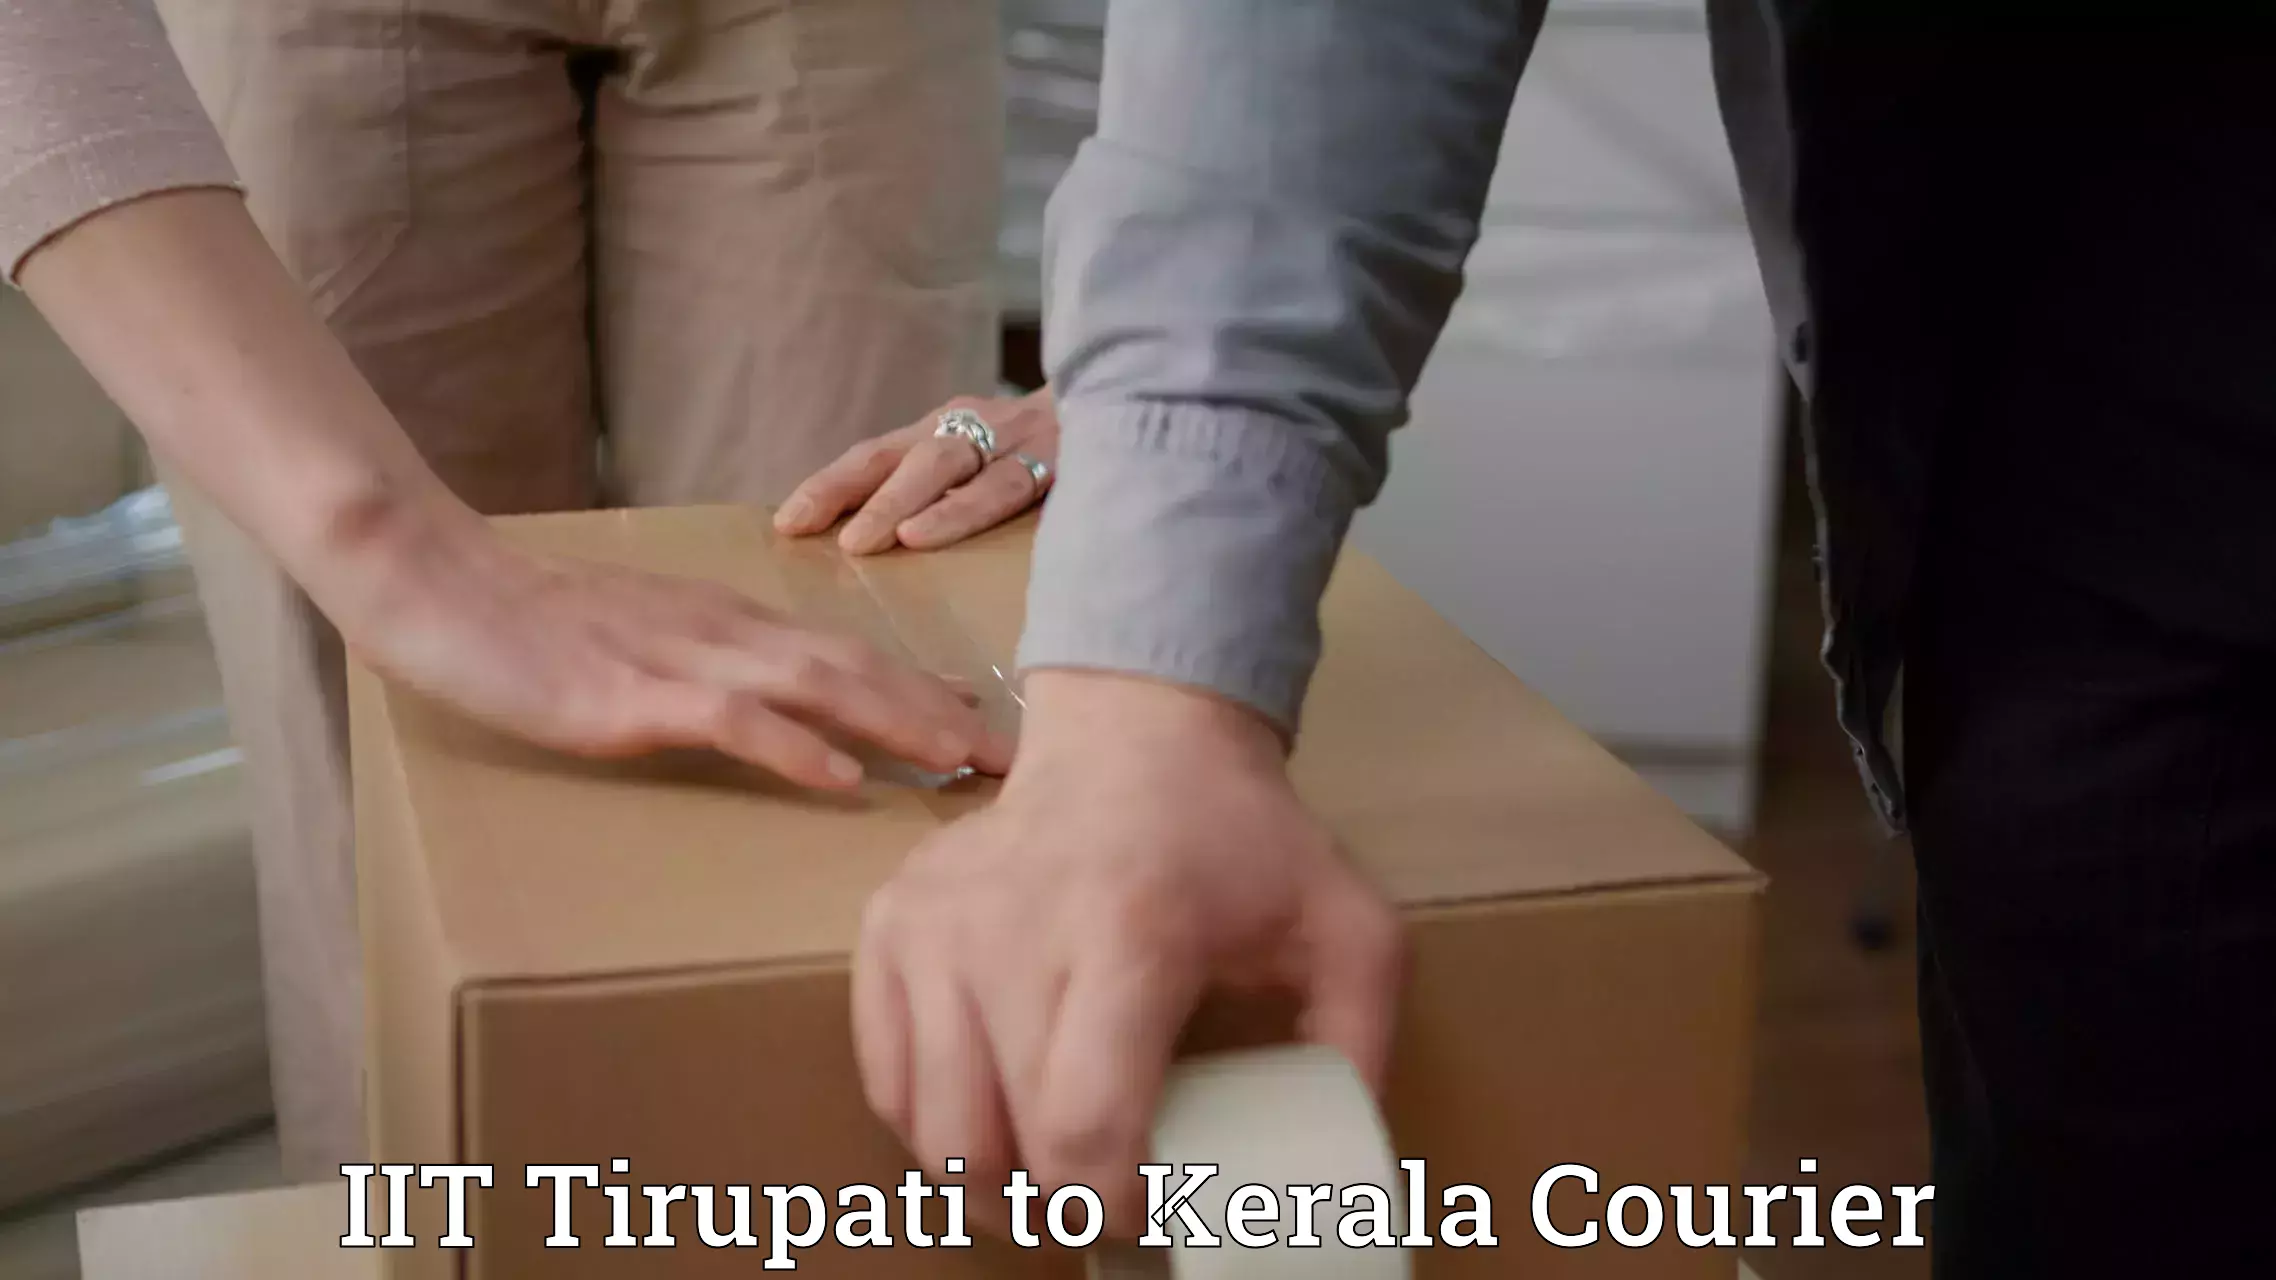 Professional courier services IIT Tirupati to Kattappana